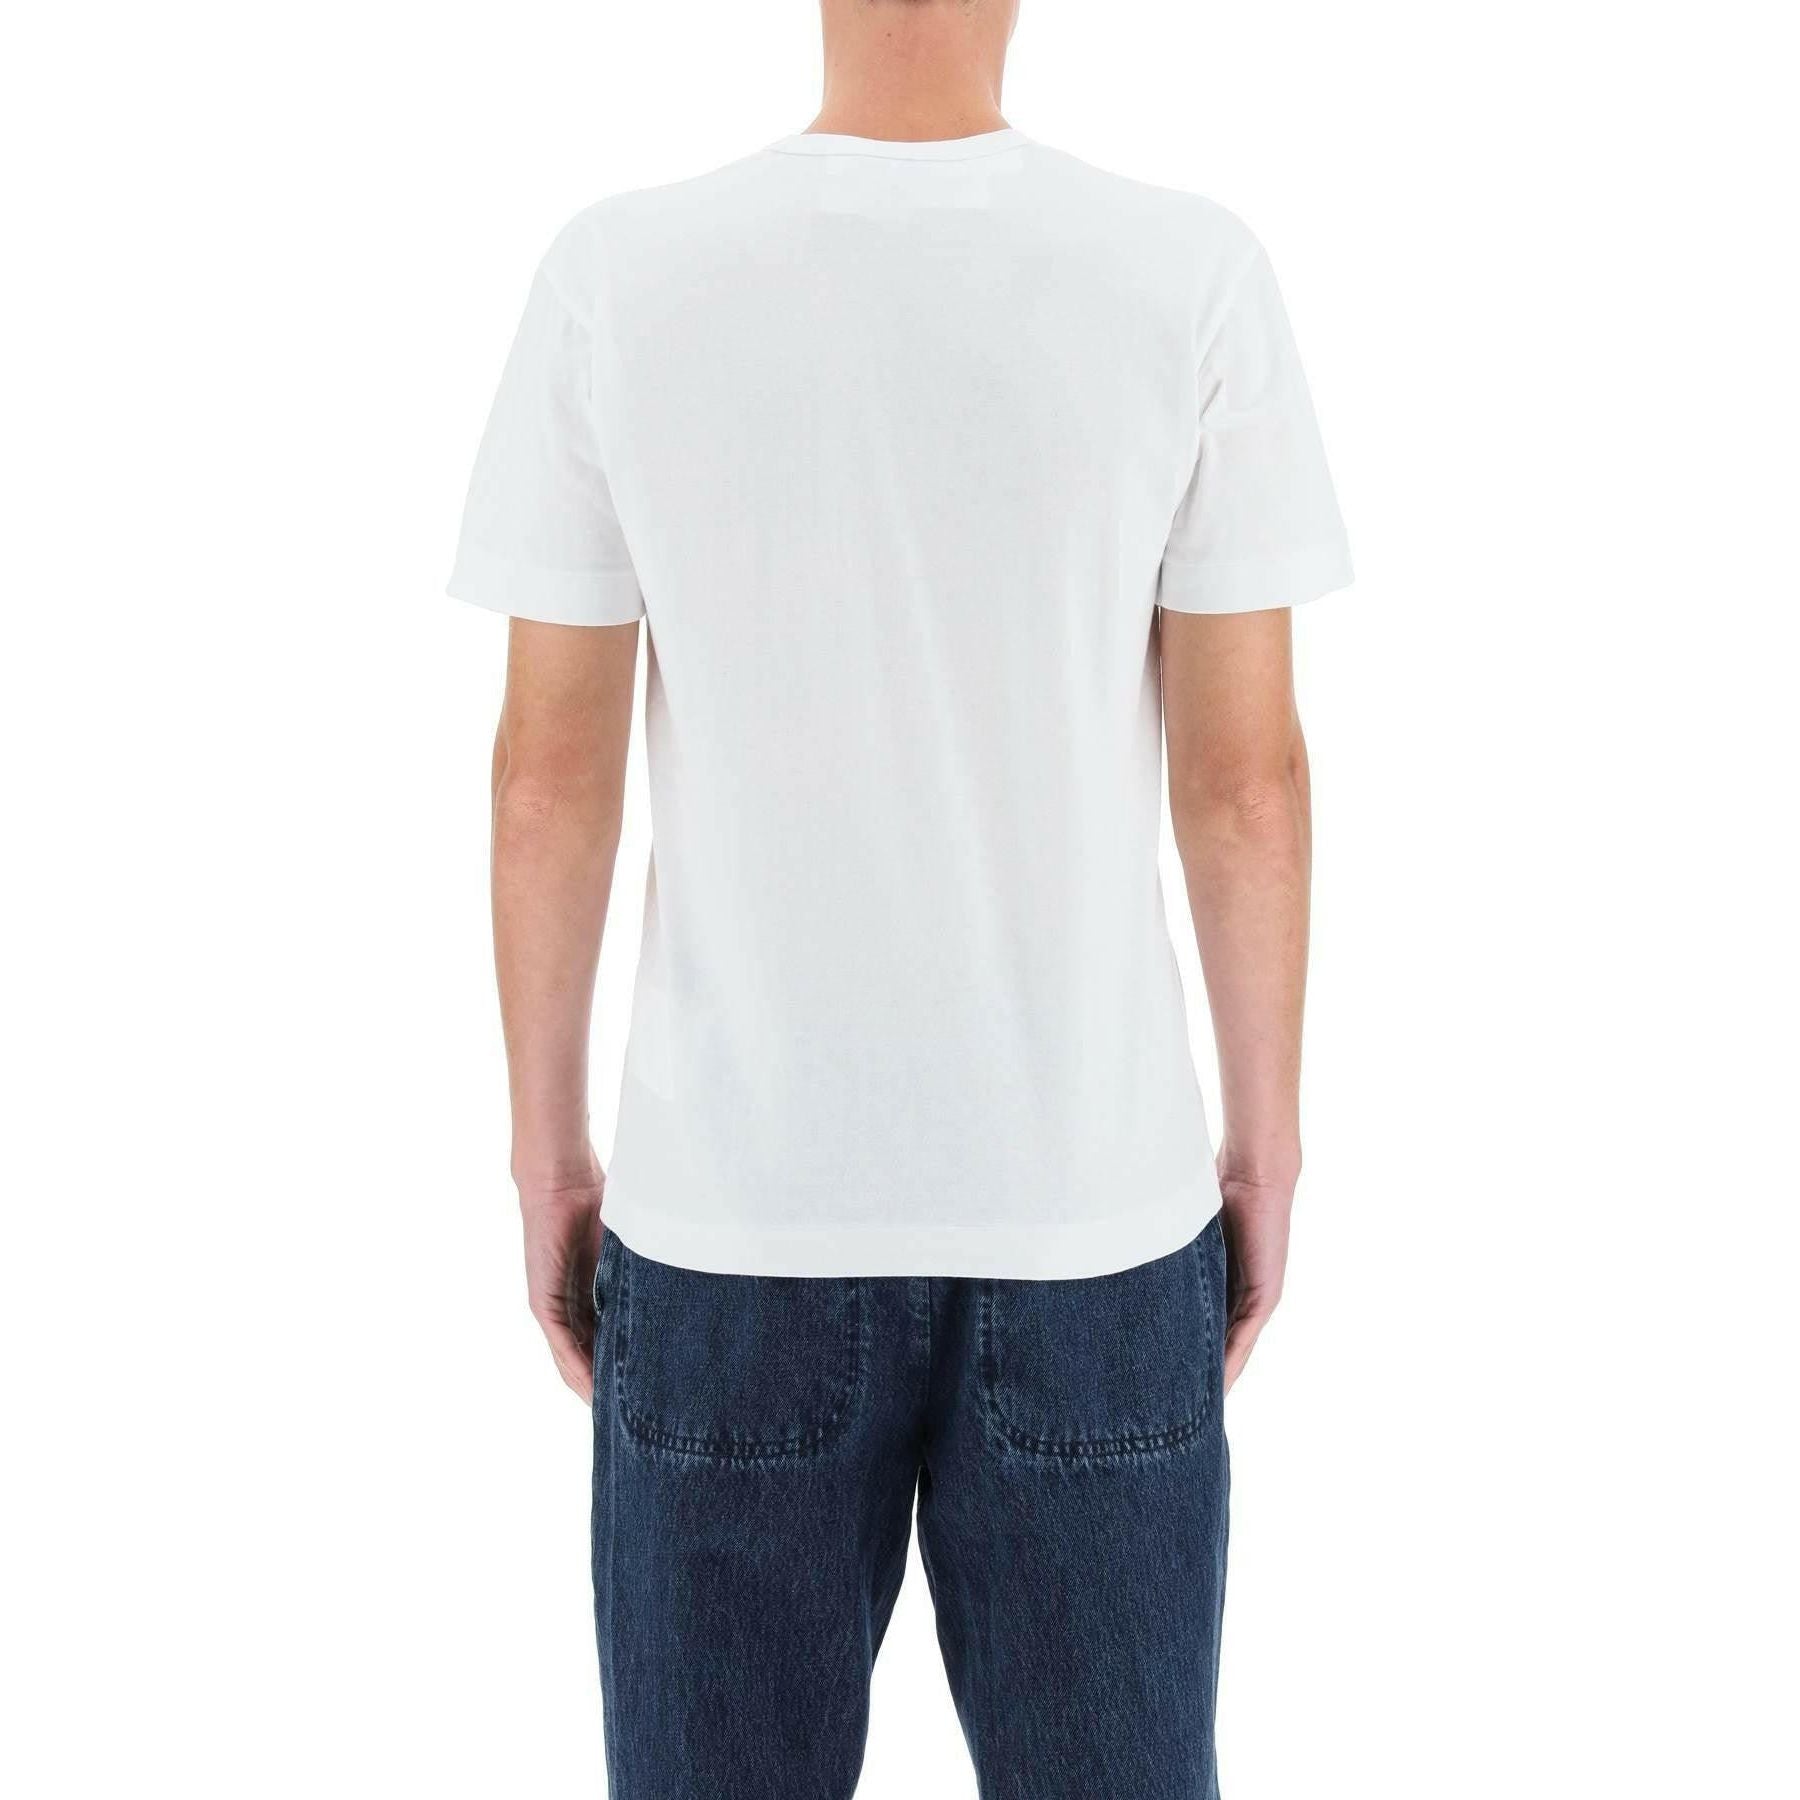 White Heart Polka Dot Cotton T-Shirt COMME DES GARCONS PLAY JOHN JULIA.